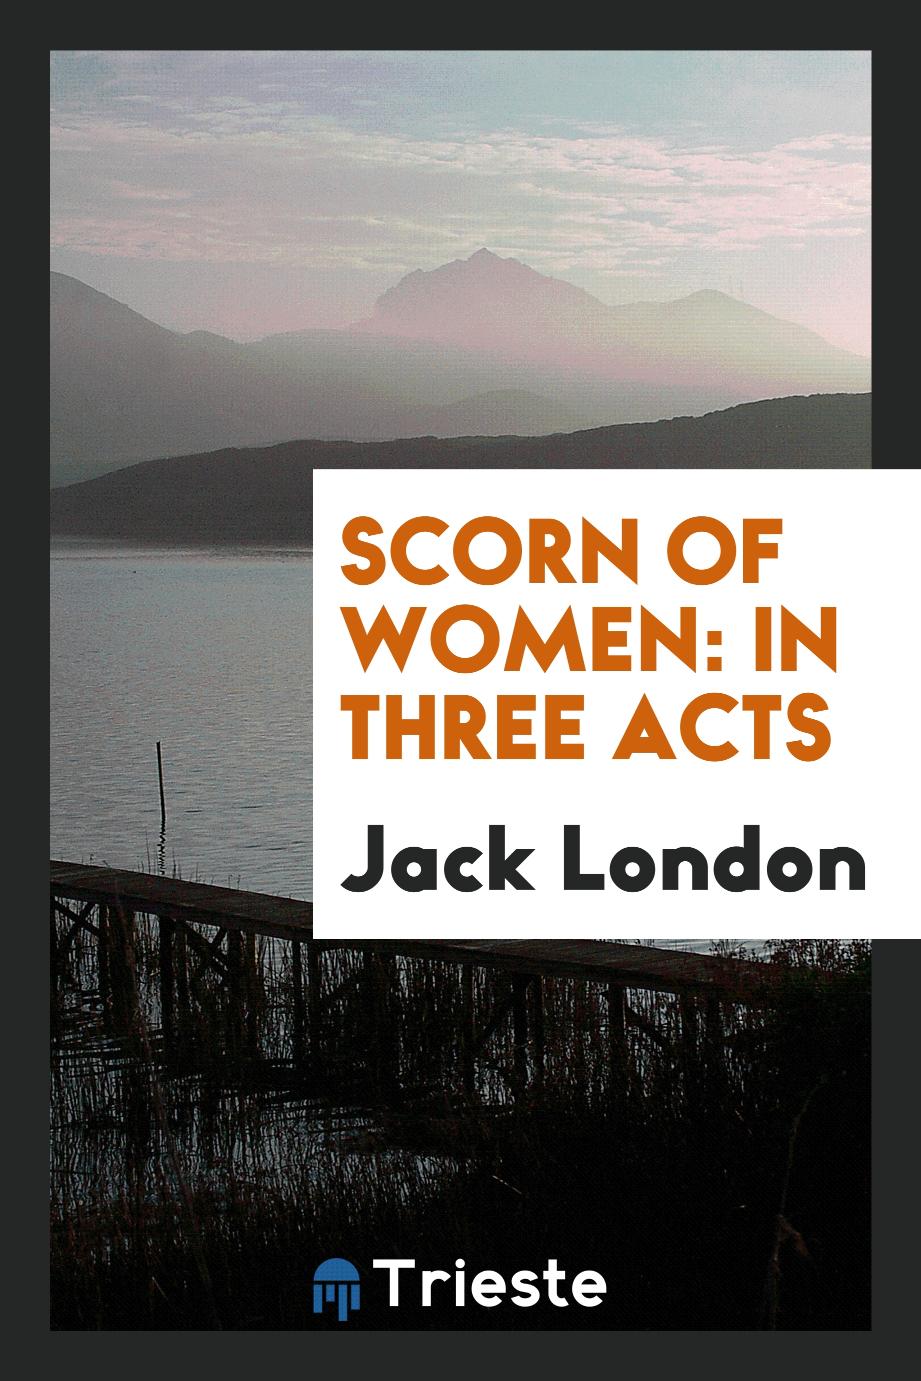 Scorn of women: in three acts